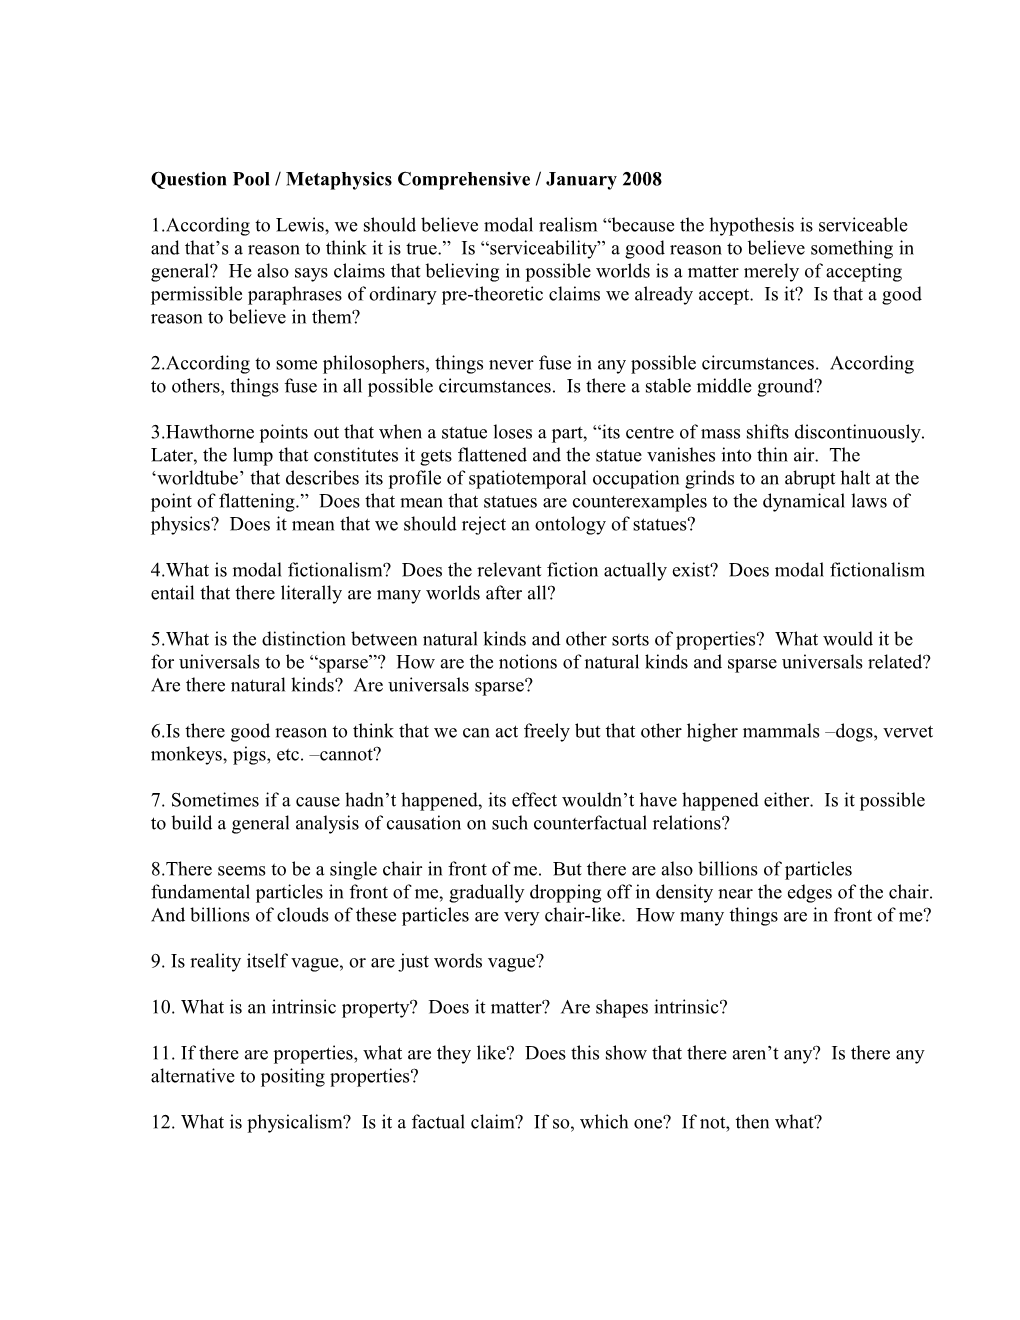 Question Pool / Metaphysics Comprehensive / Winter 2008